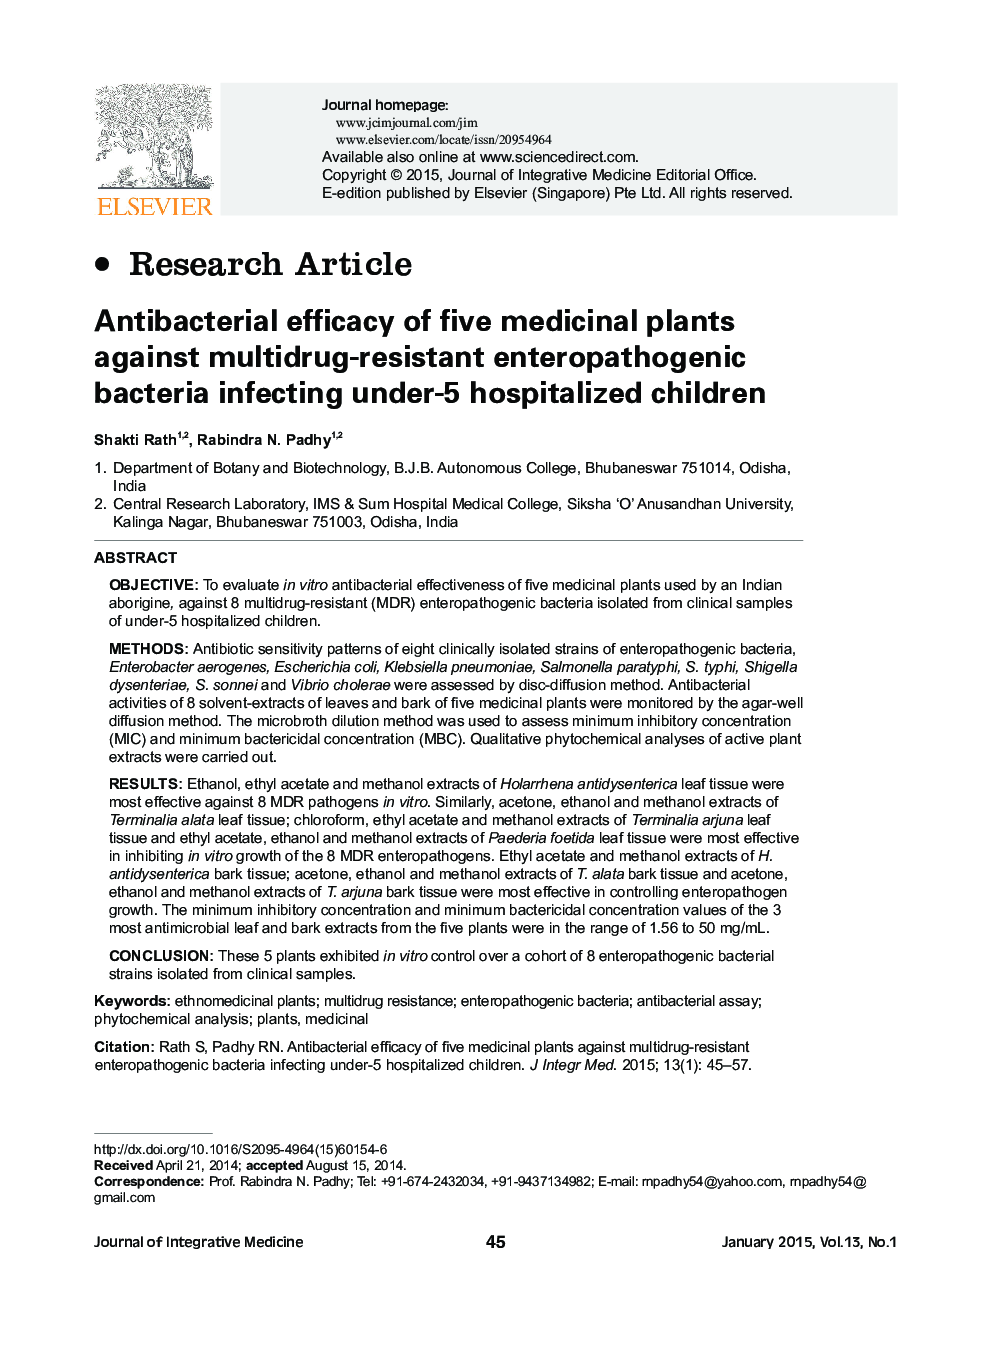 Antibacterial efficacy of five medicinal plants against multidrug-resistant enteropathogenic bacteria infecting under-5 hospitalized children